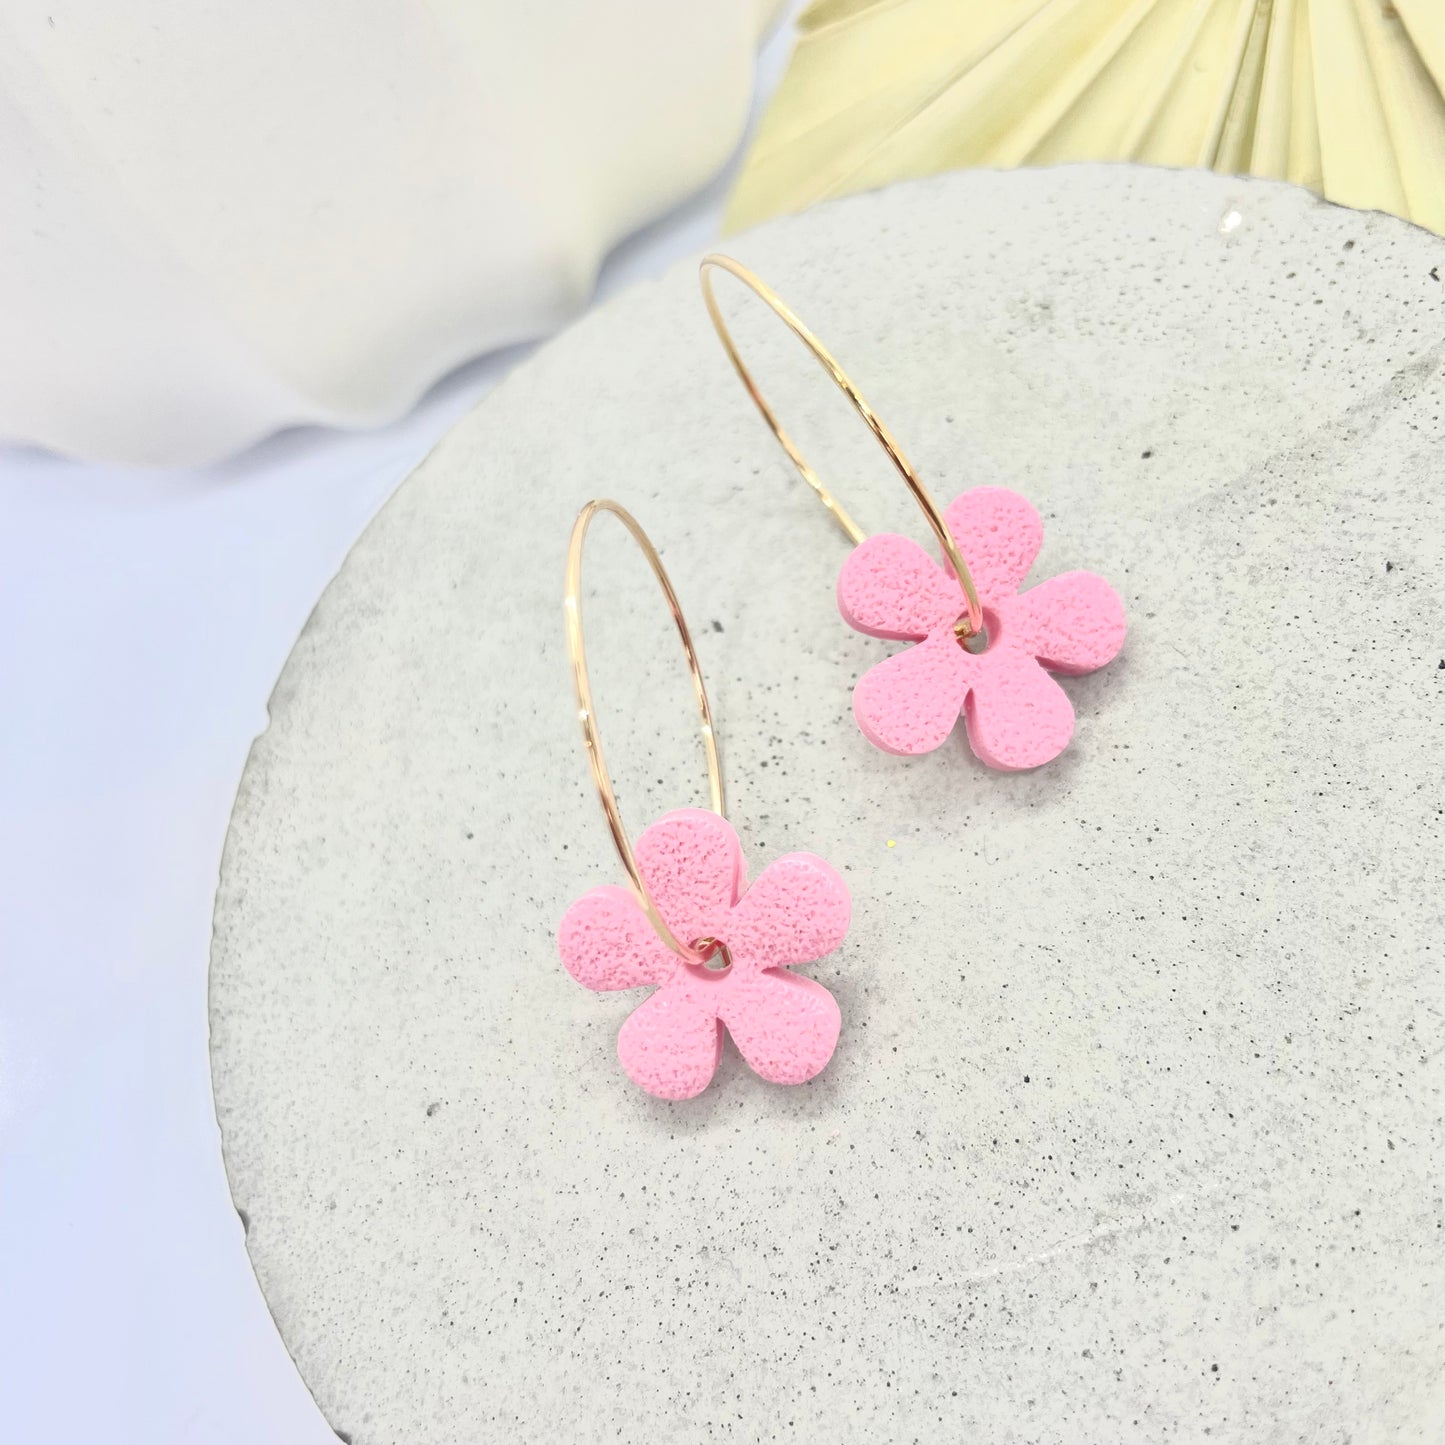 Handmade polymer clay flower earrings, hoop earrings, beautiful birthday gift for her, post box gift, pink flower earrings